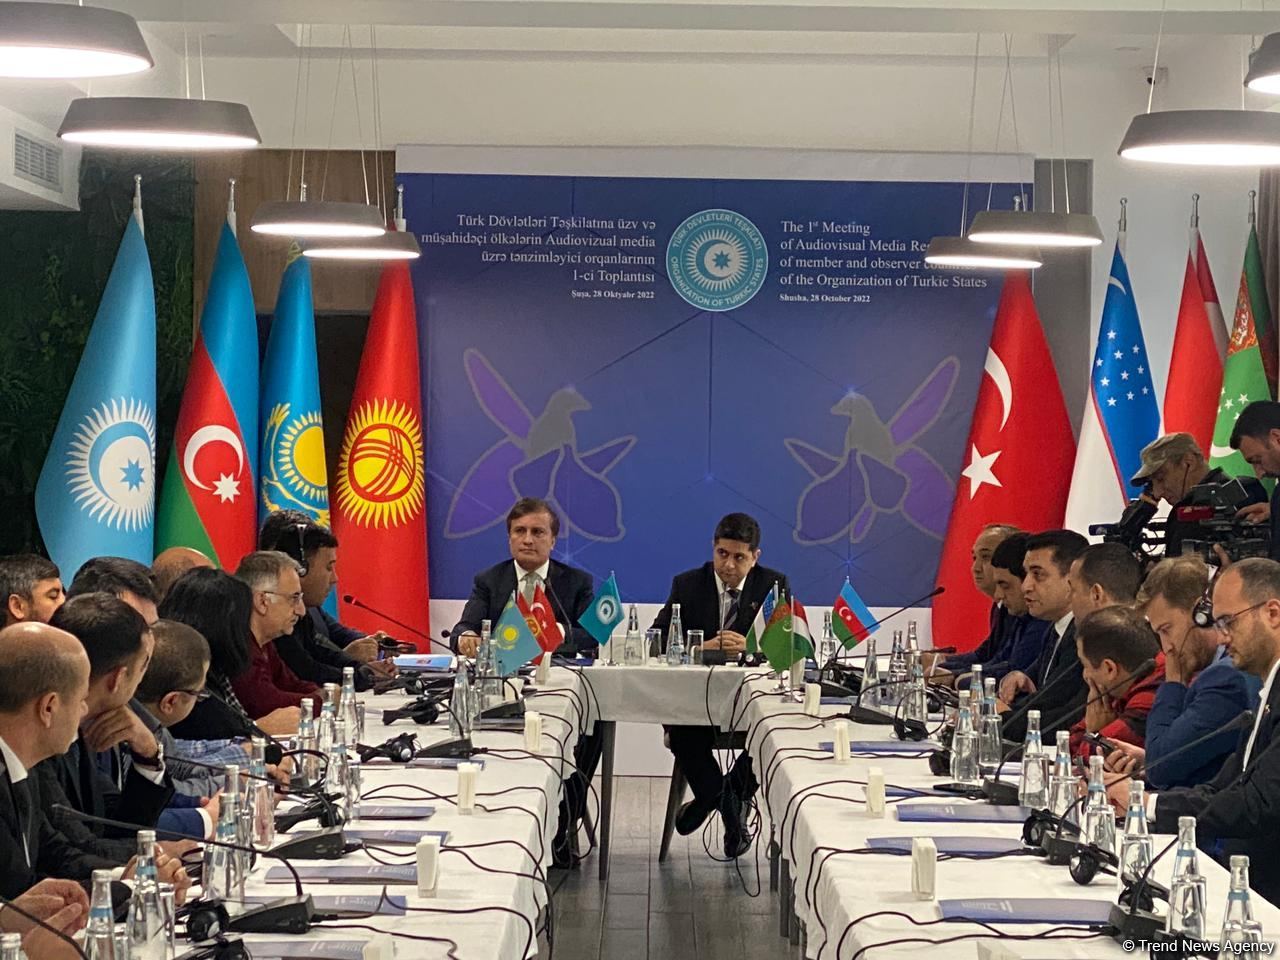 Shusha Declaration of intent signed within 1st meeting of Audiovisual Media Regulators of Organization of Turkic States (PHOTO)